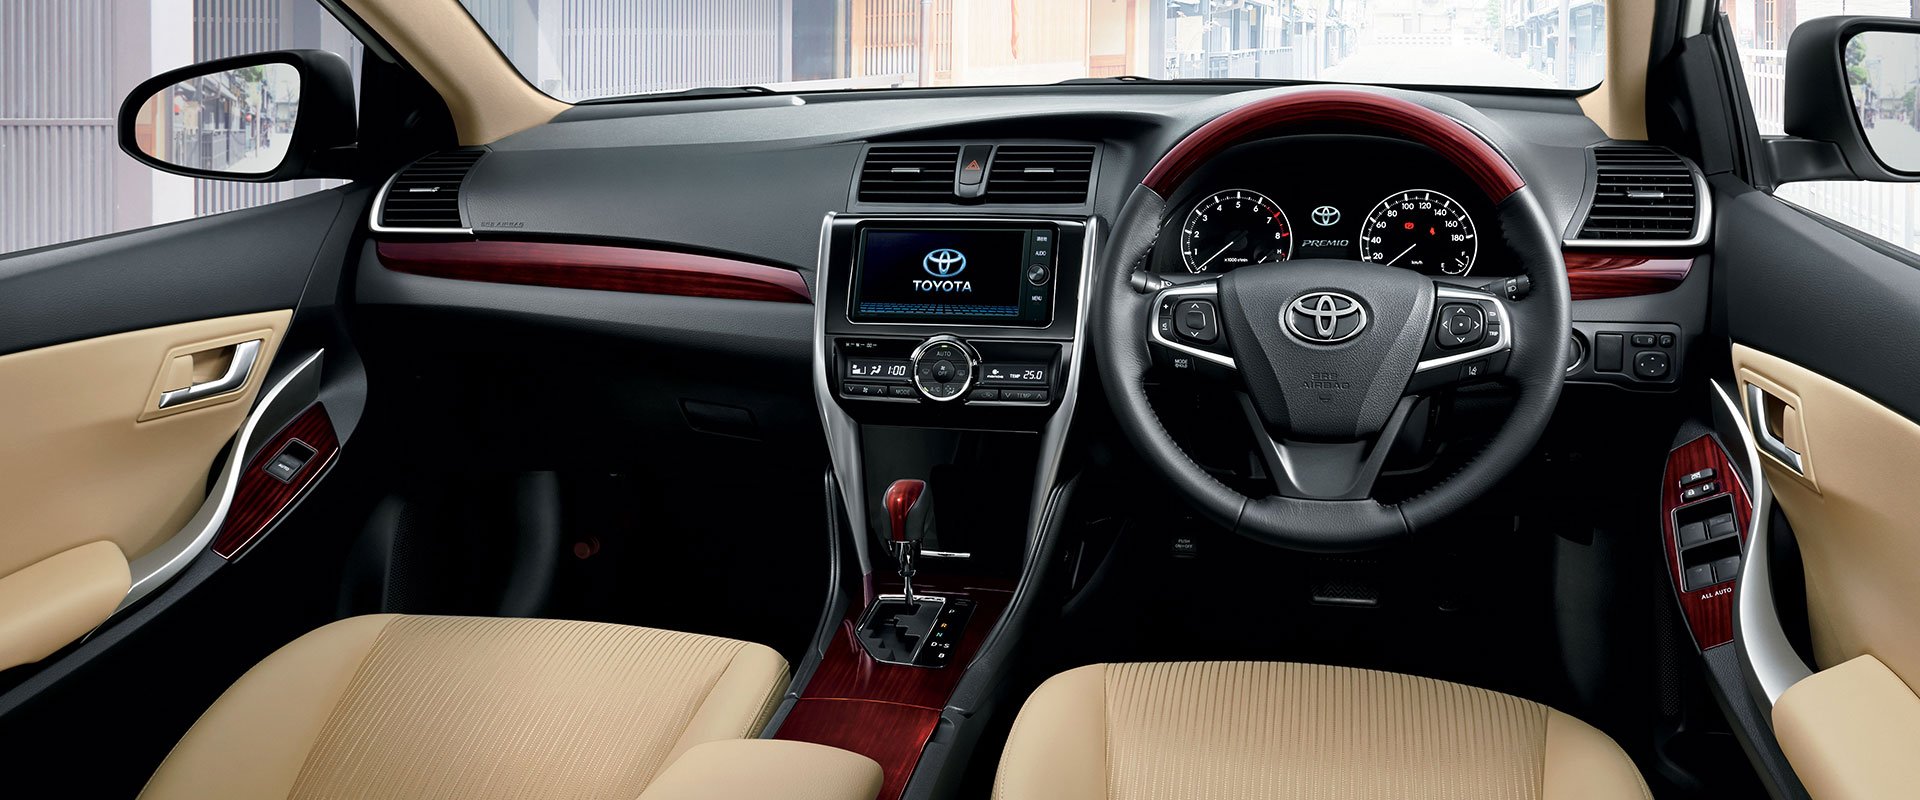 Toyota Allion interior - Cockpit